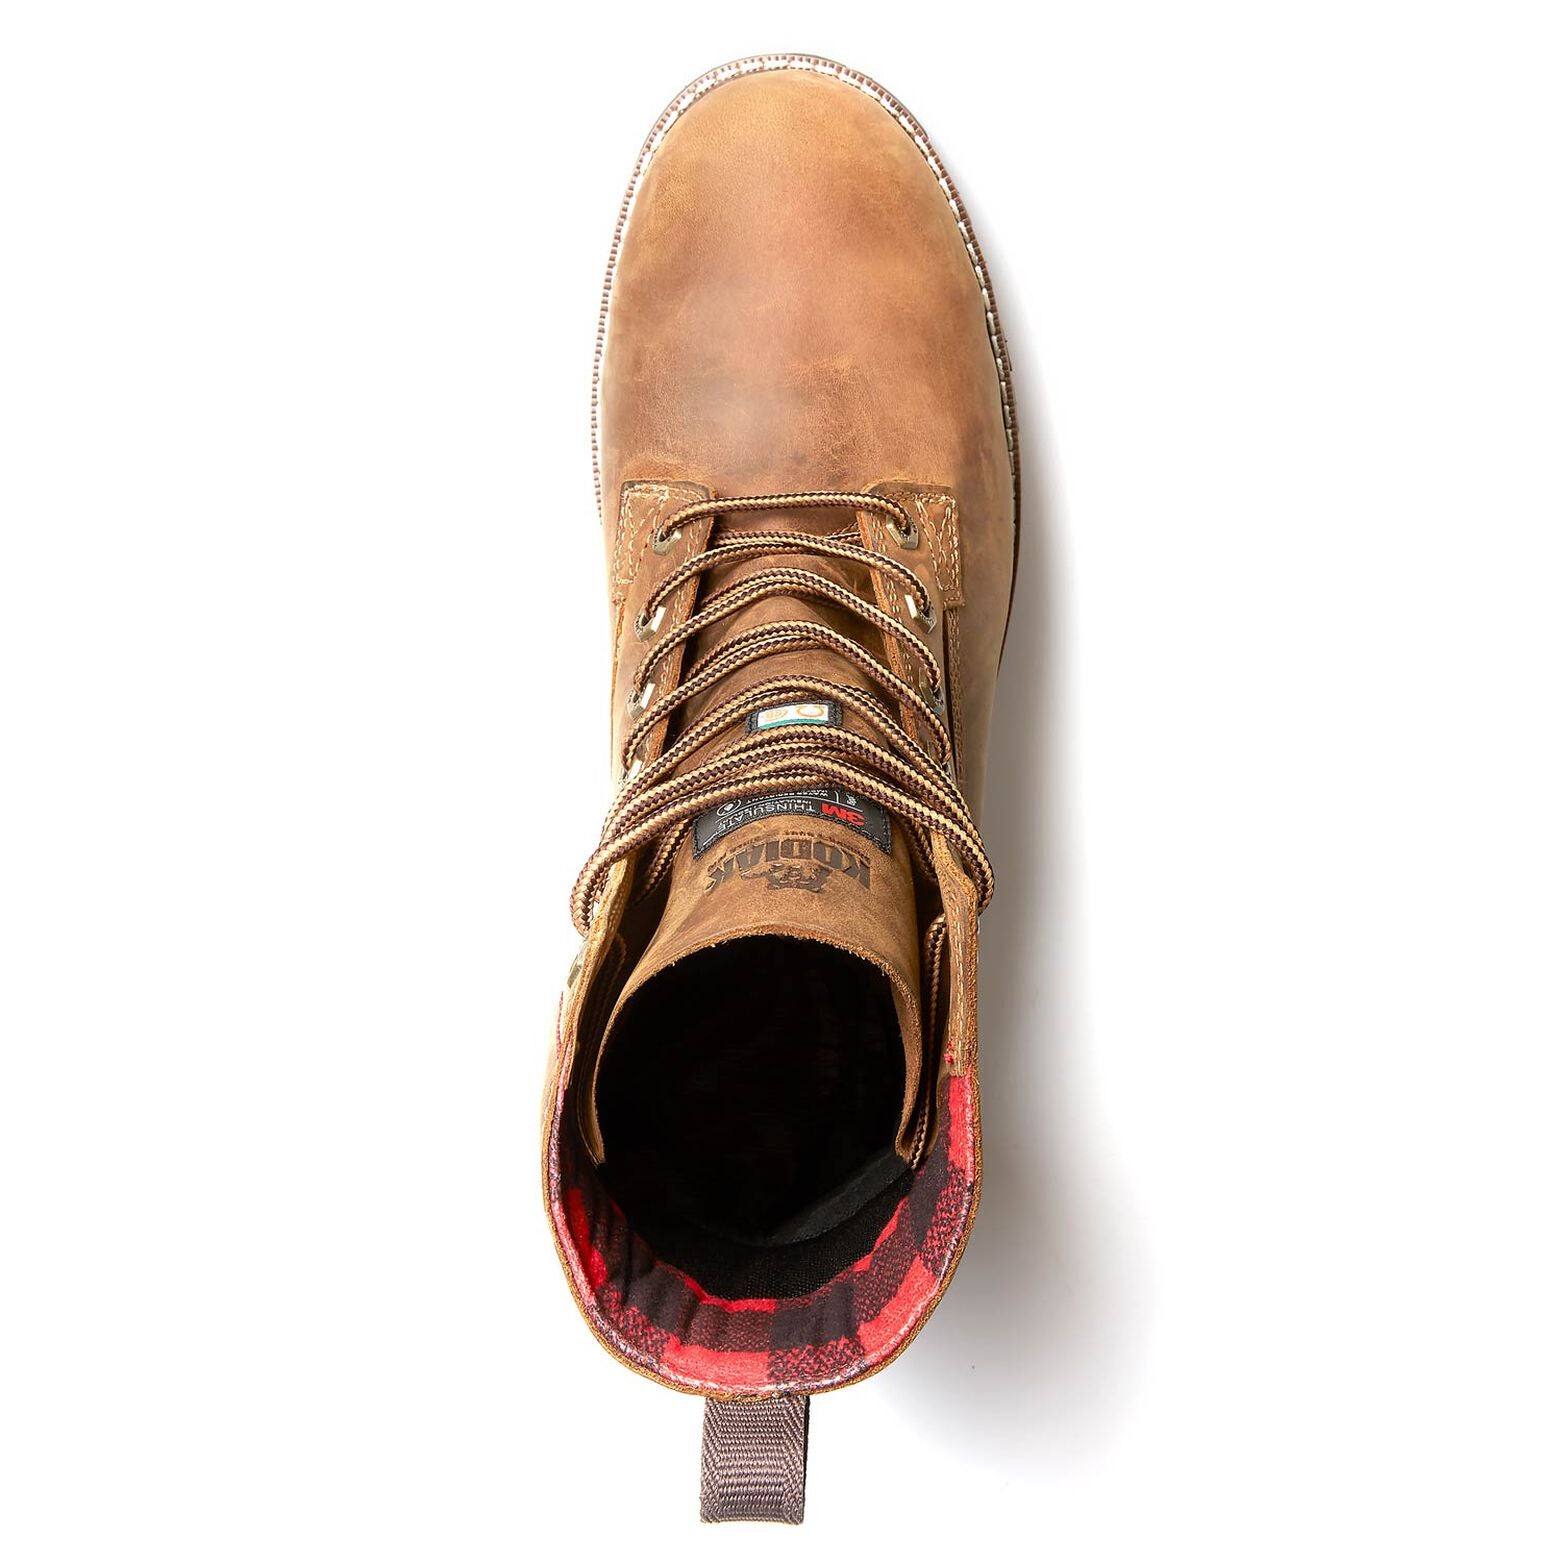 Kodiak McKinney Composite Toe 8" Safety Work Boots | Brown | Sizes 7 - 15 Work Boots - Cleanflow